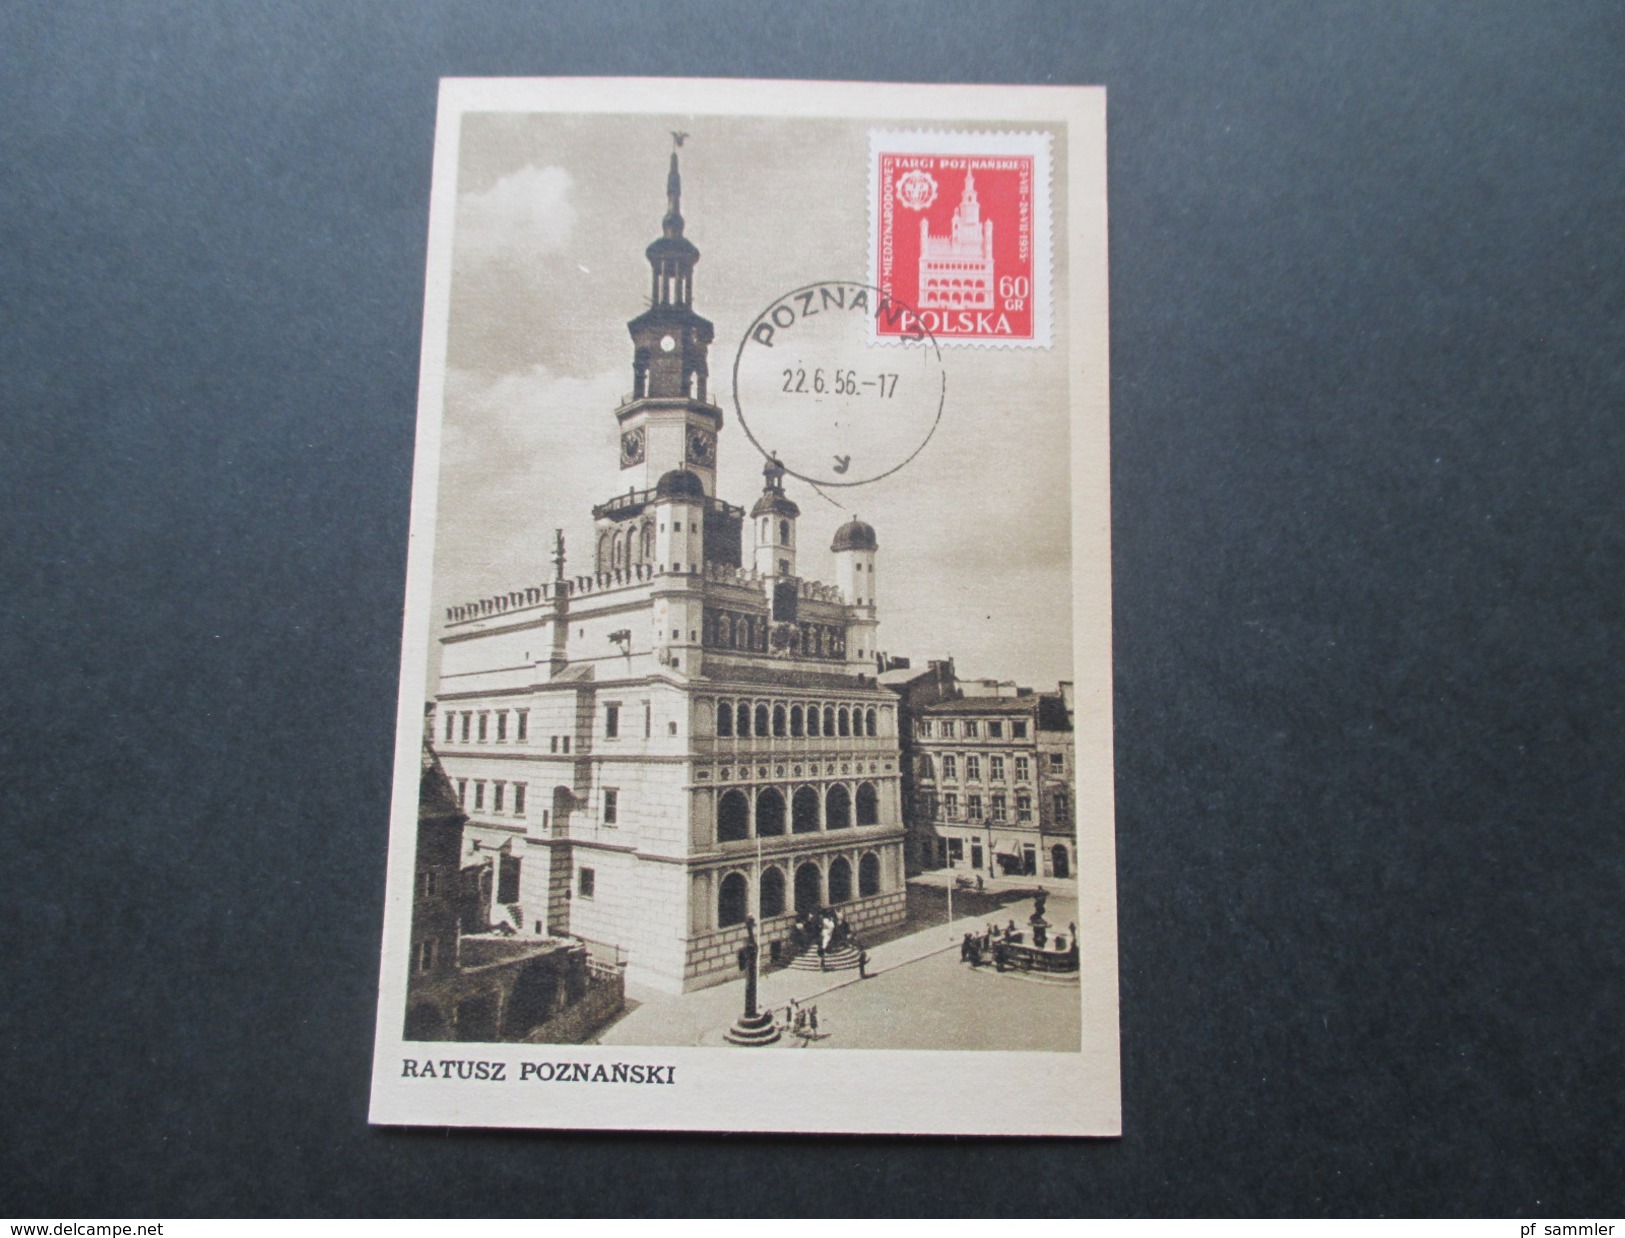 Polen 1956 / 58 Maximumkarten!! Ansichtskarten / Echtfoto. Gdansk usw. 11 Karten!! Schöner Posten!